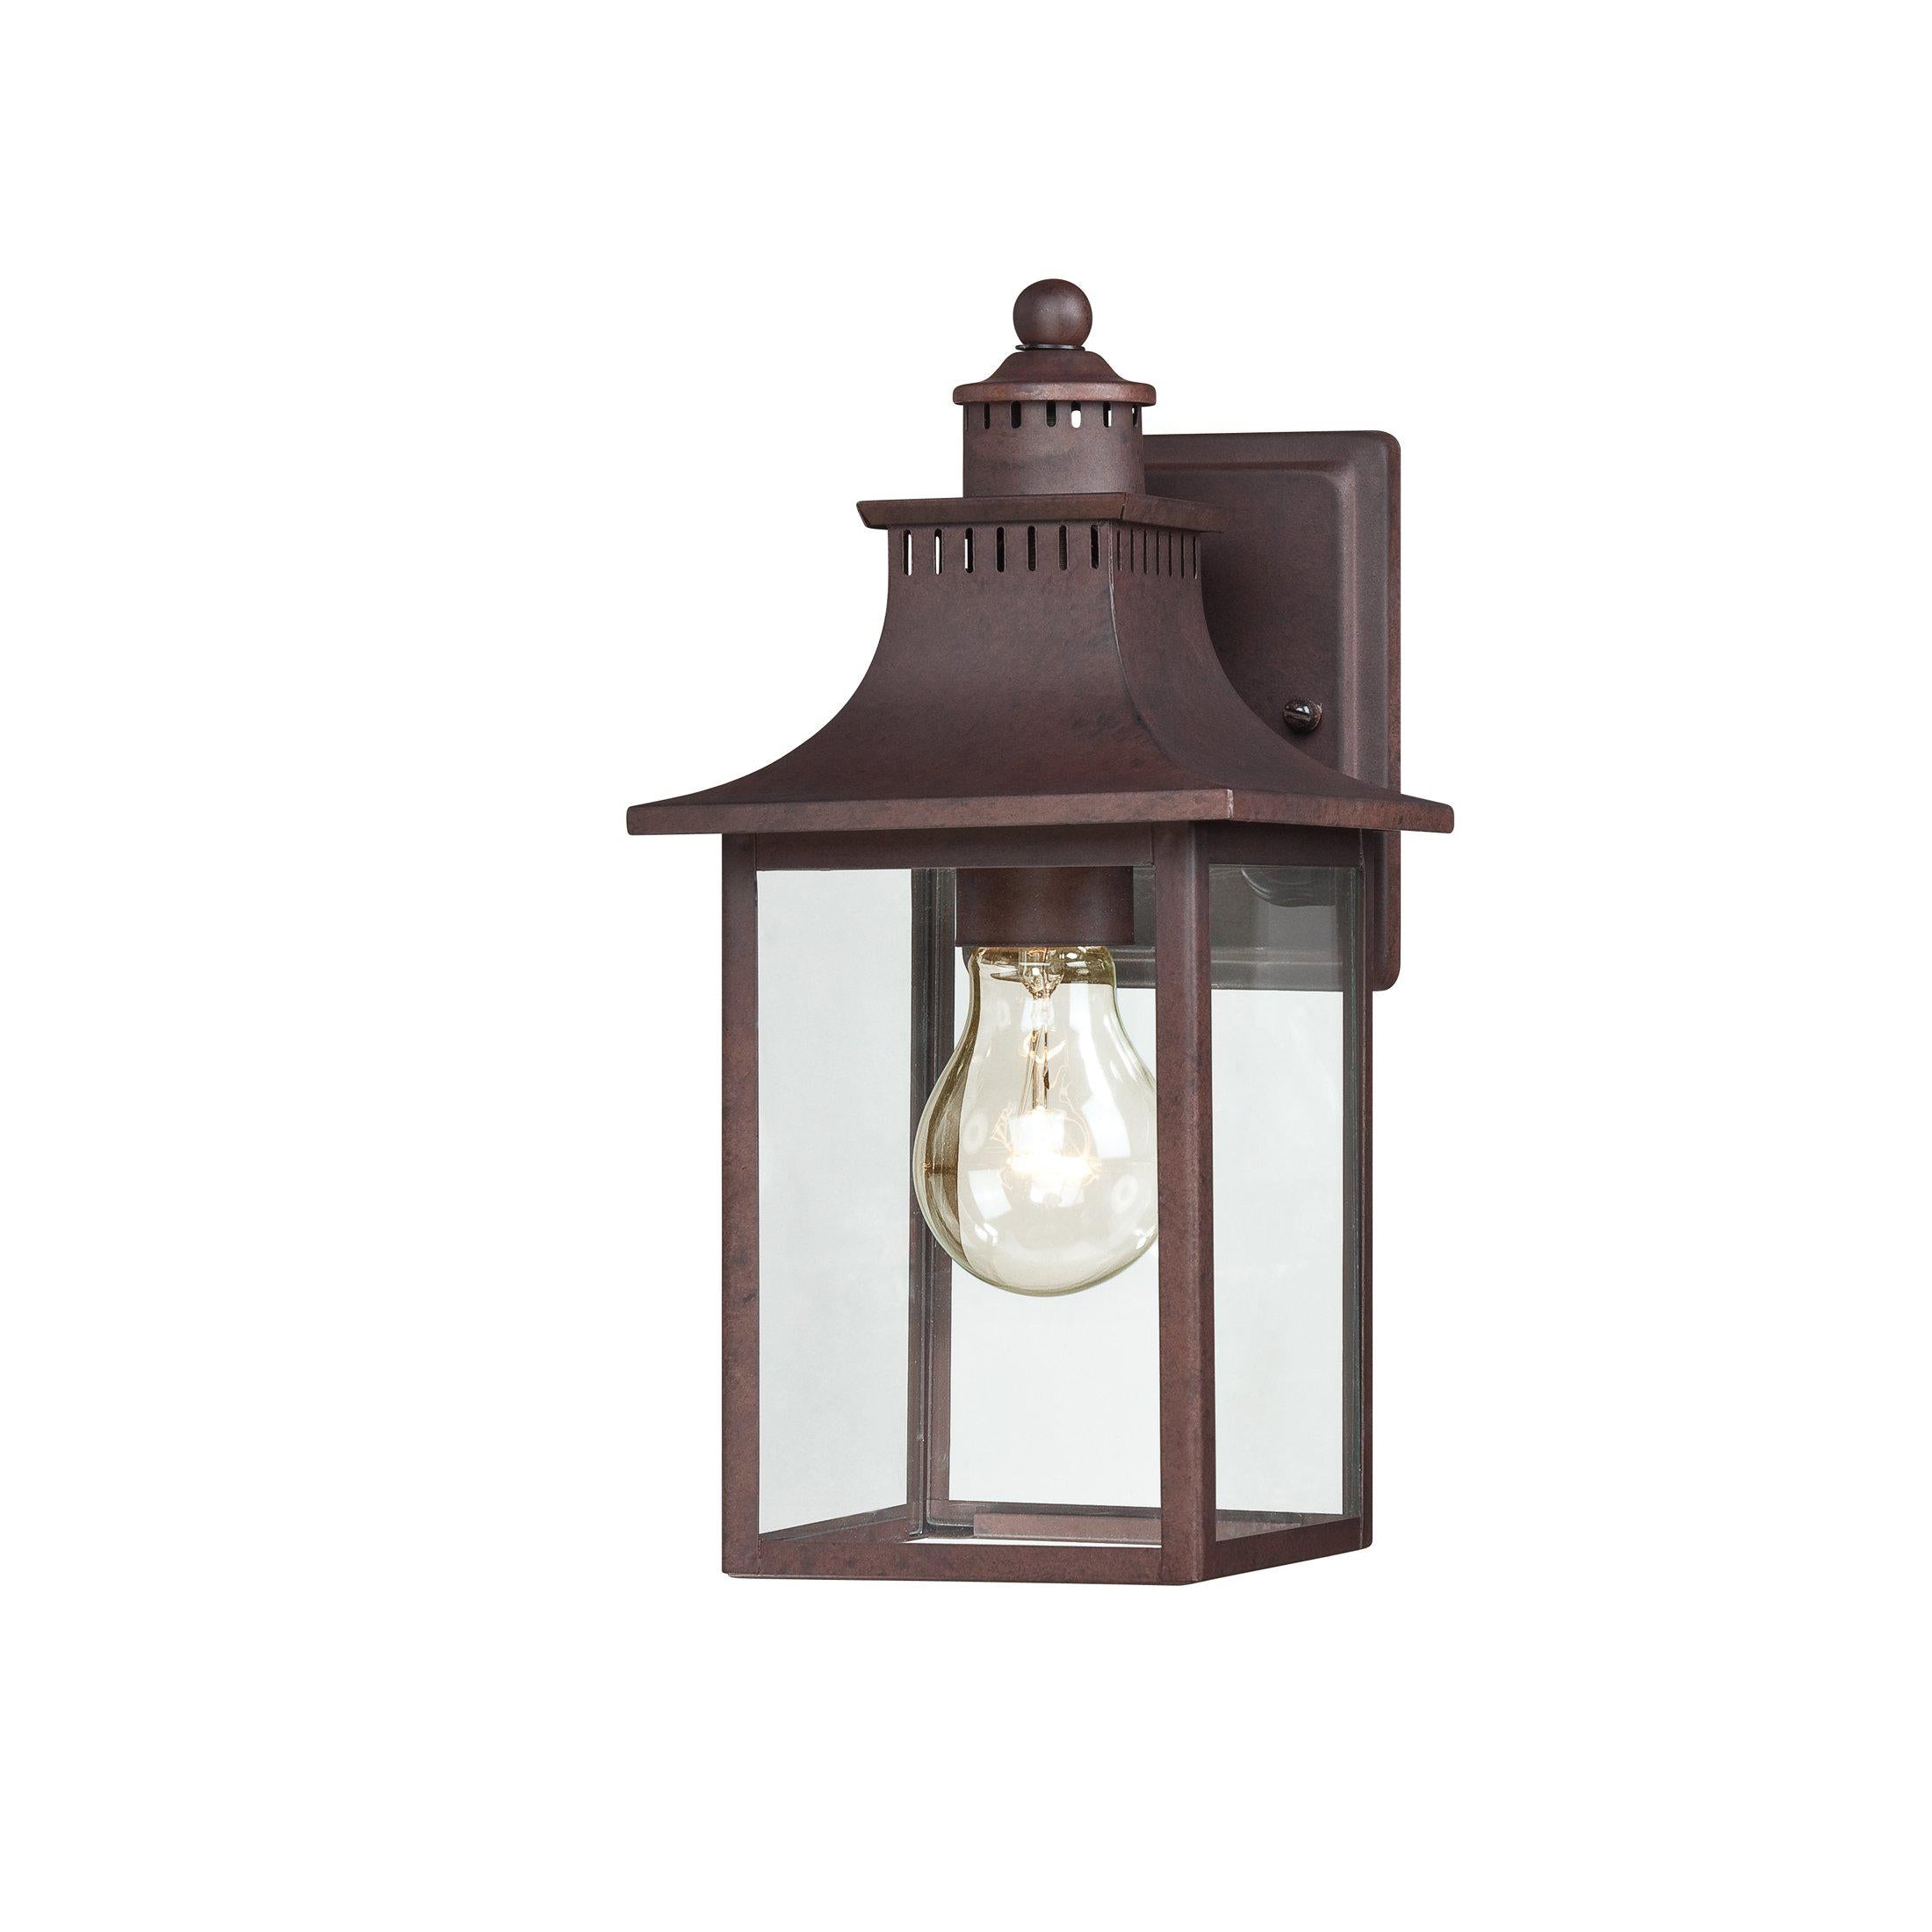 Quoizel  Chancellor Outdoor Lantern, Small Outdoor Light Fixture Quoizel Copper Bronze  